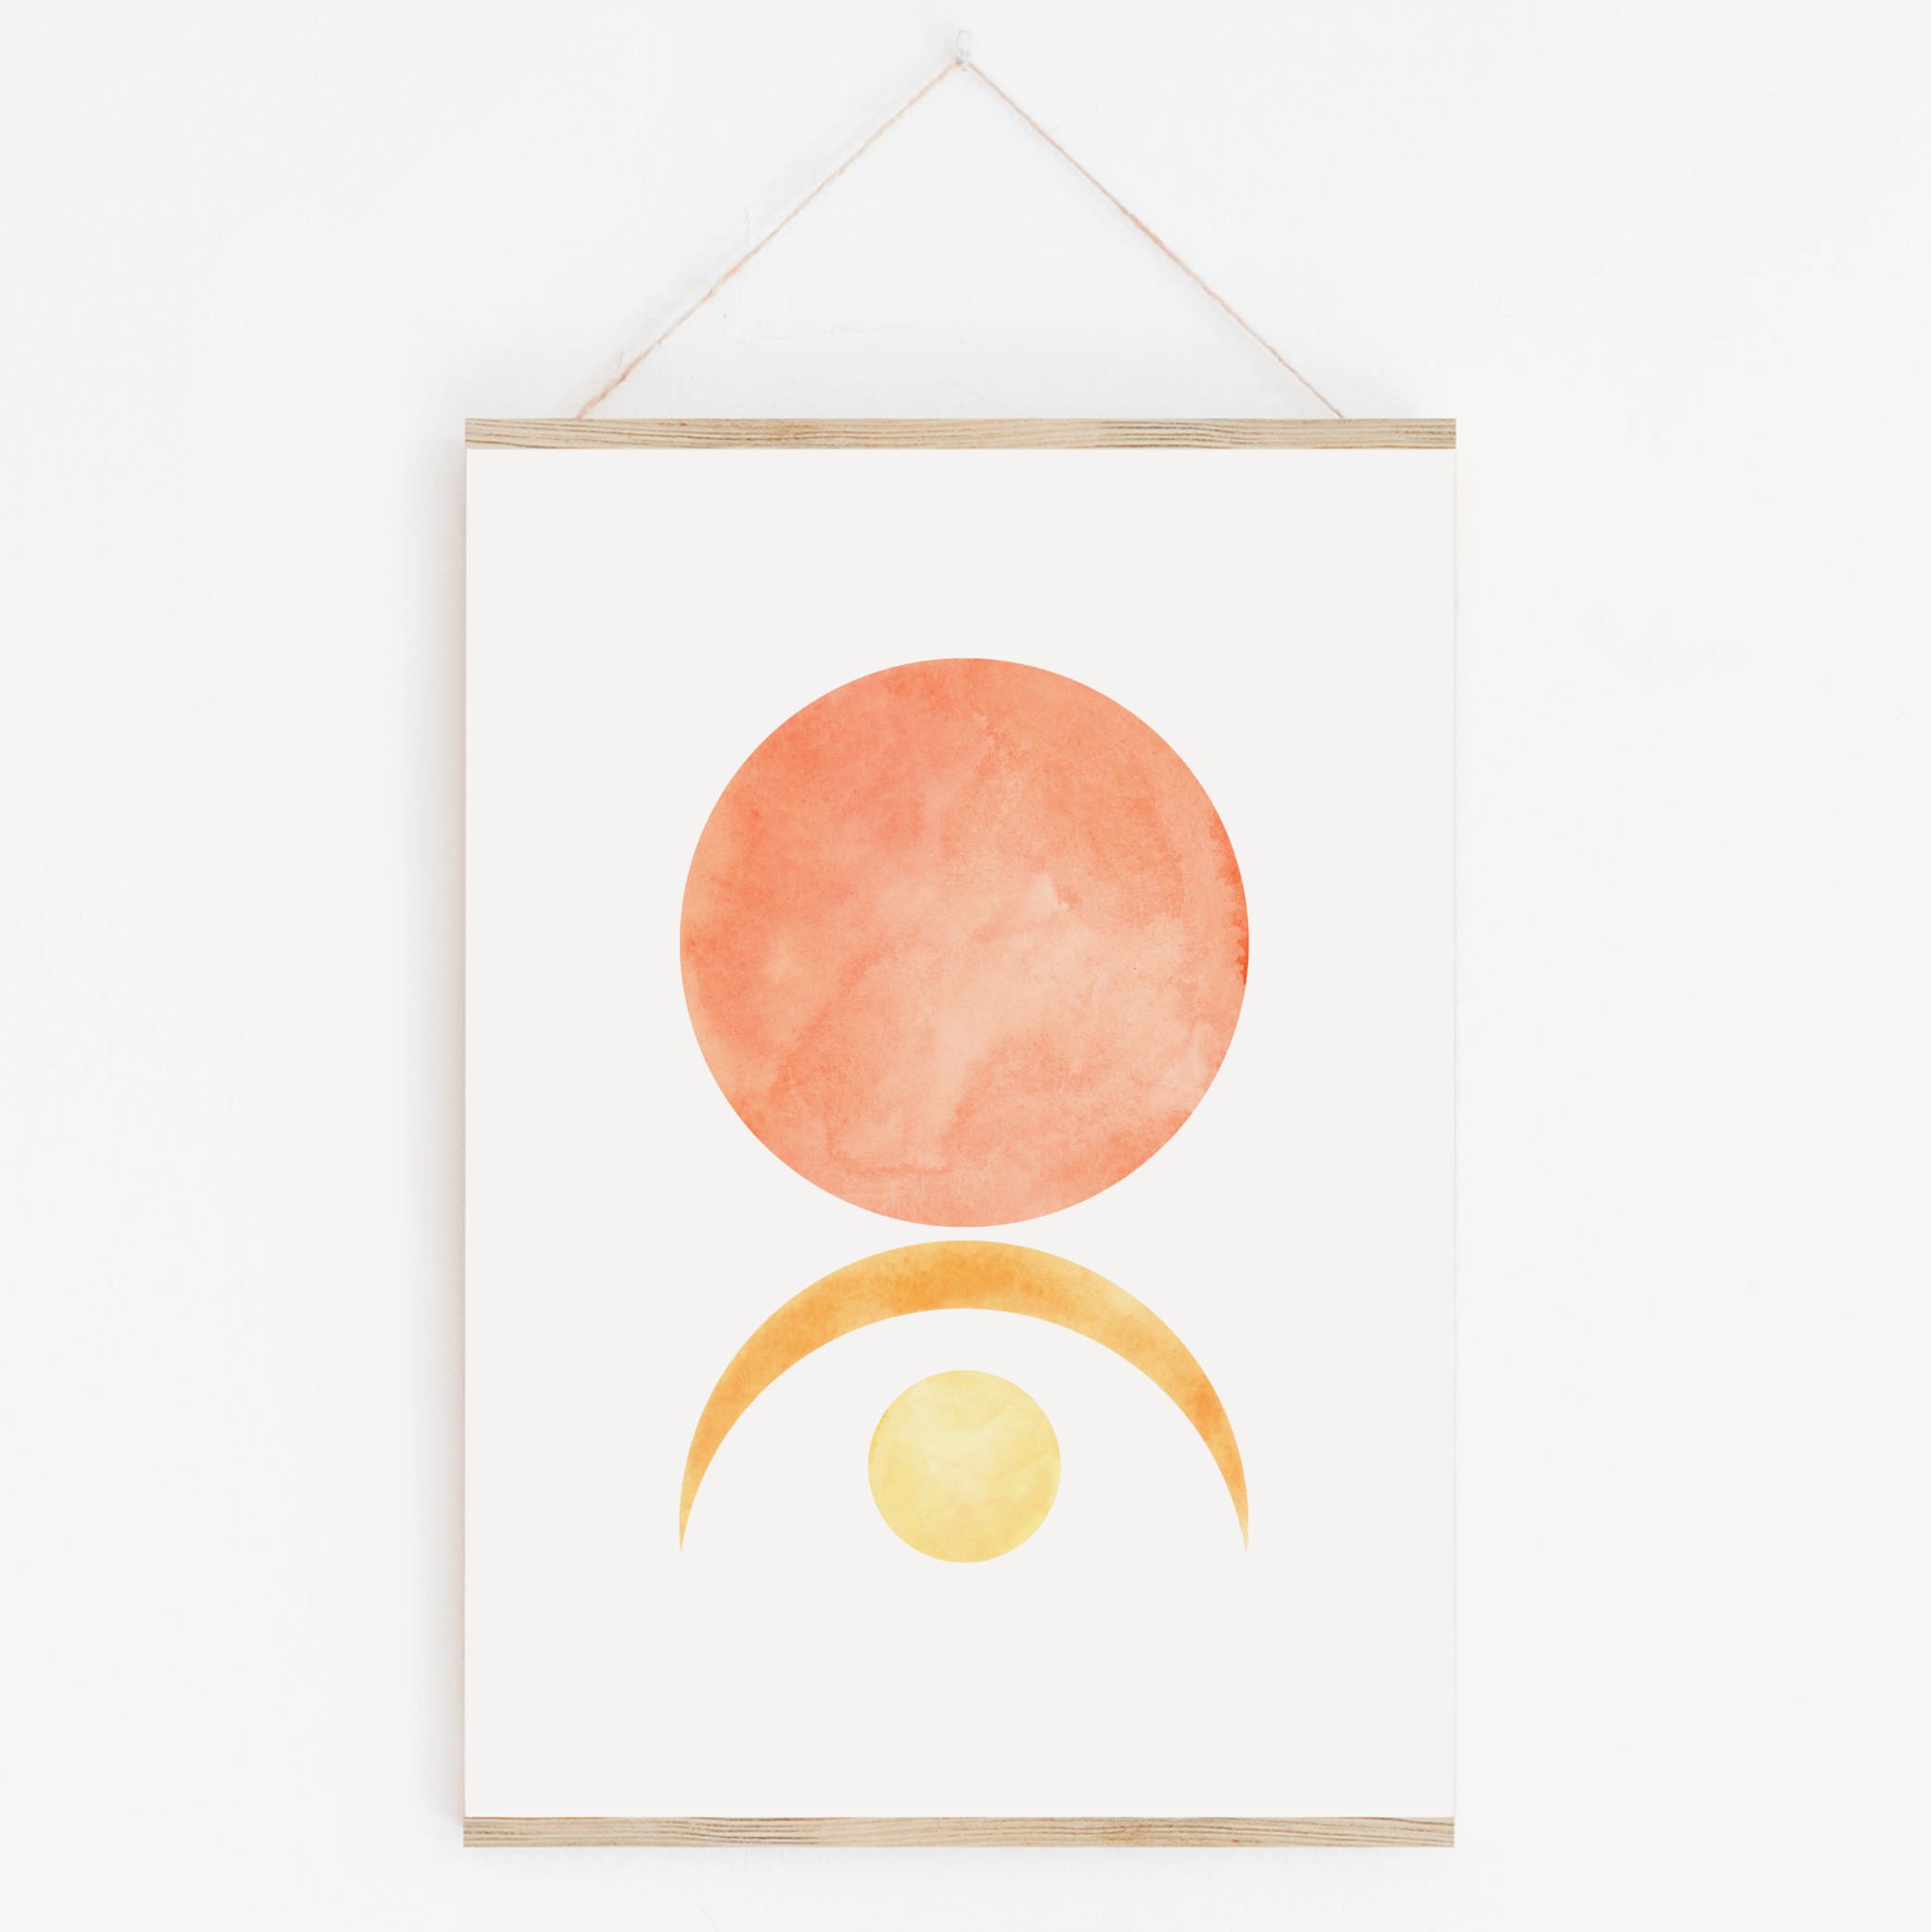 Abstract Geometric Pink and Mustard Moon Crescent Art Print A4 A3 A2 Print Hanger.jpg